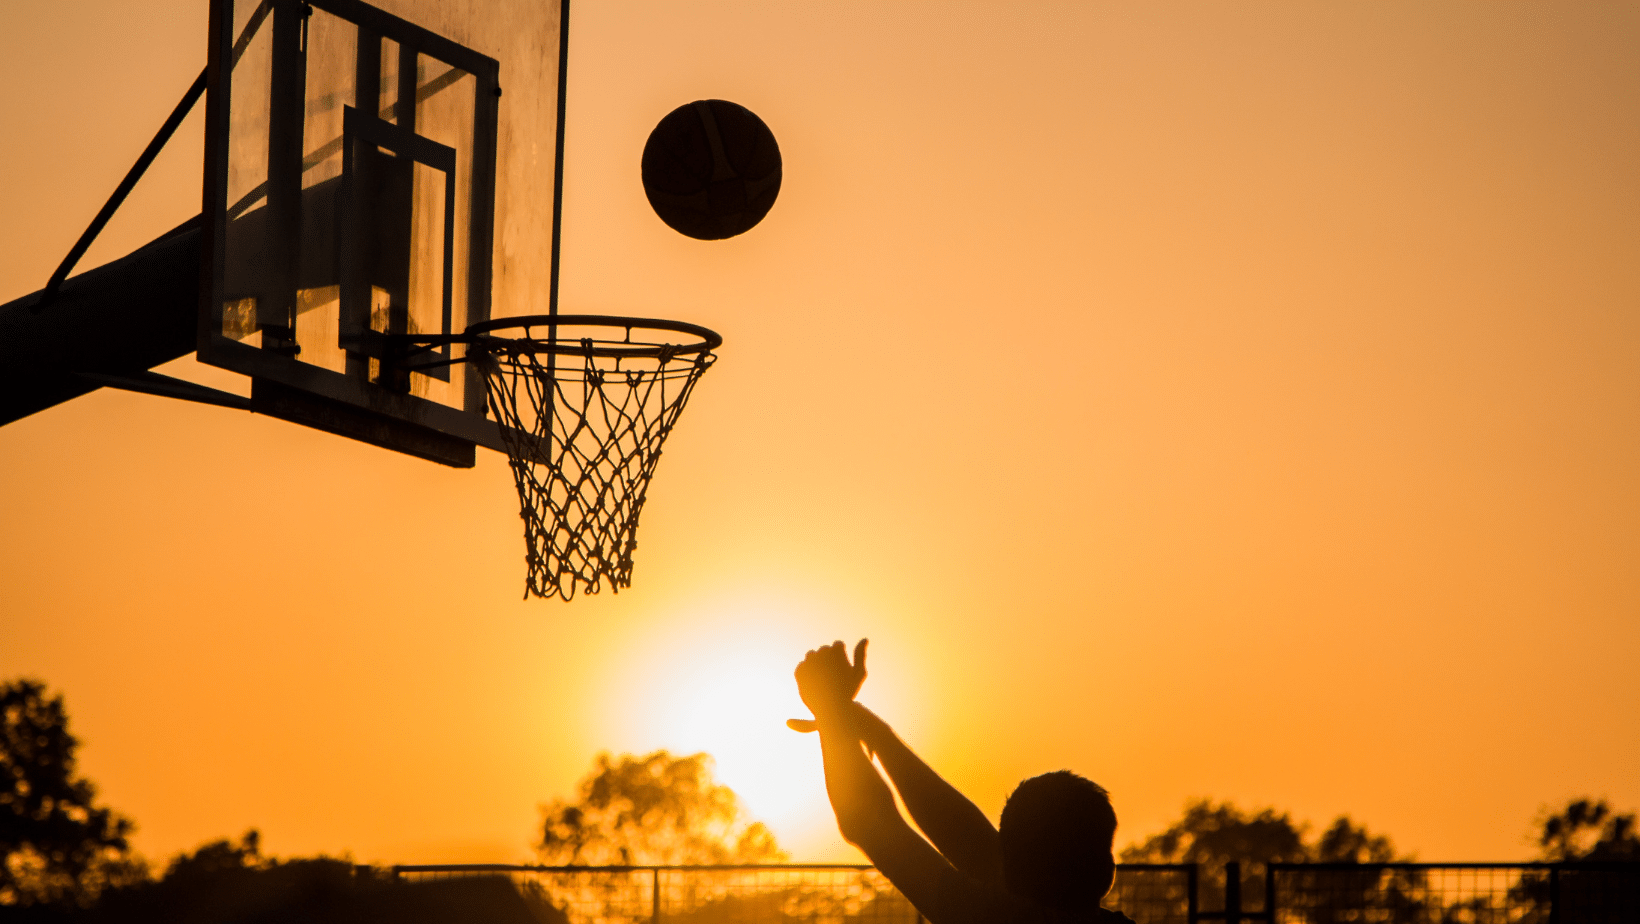 Shooting hoops - boy playing Basketball